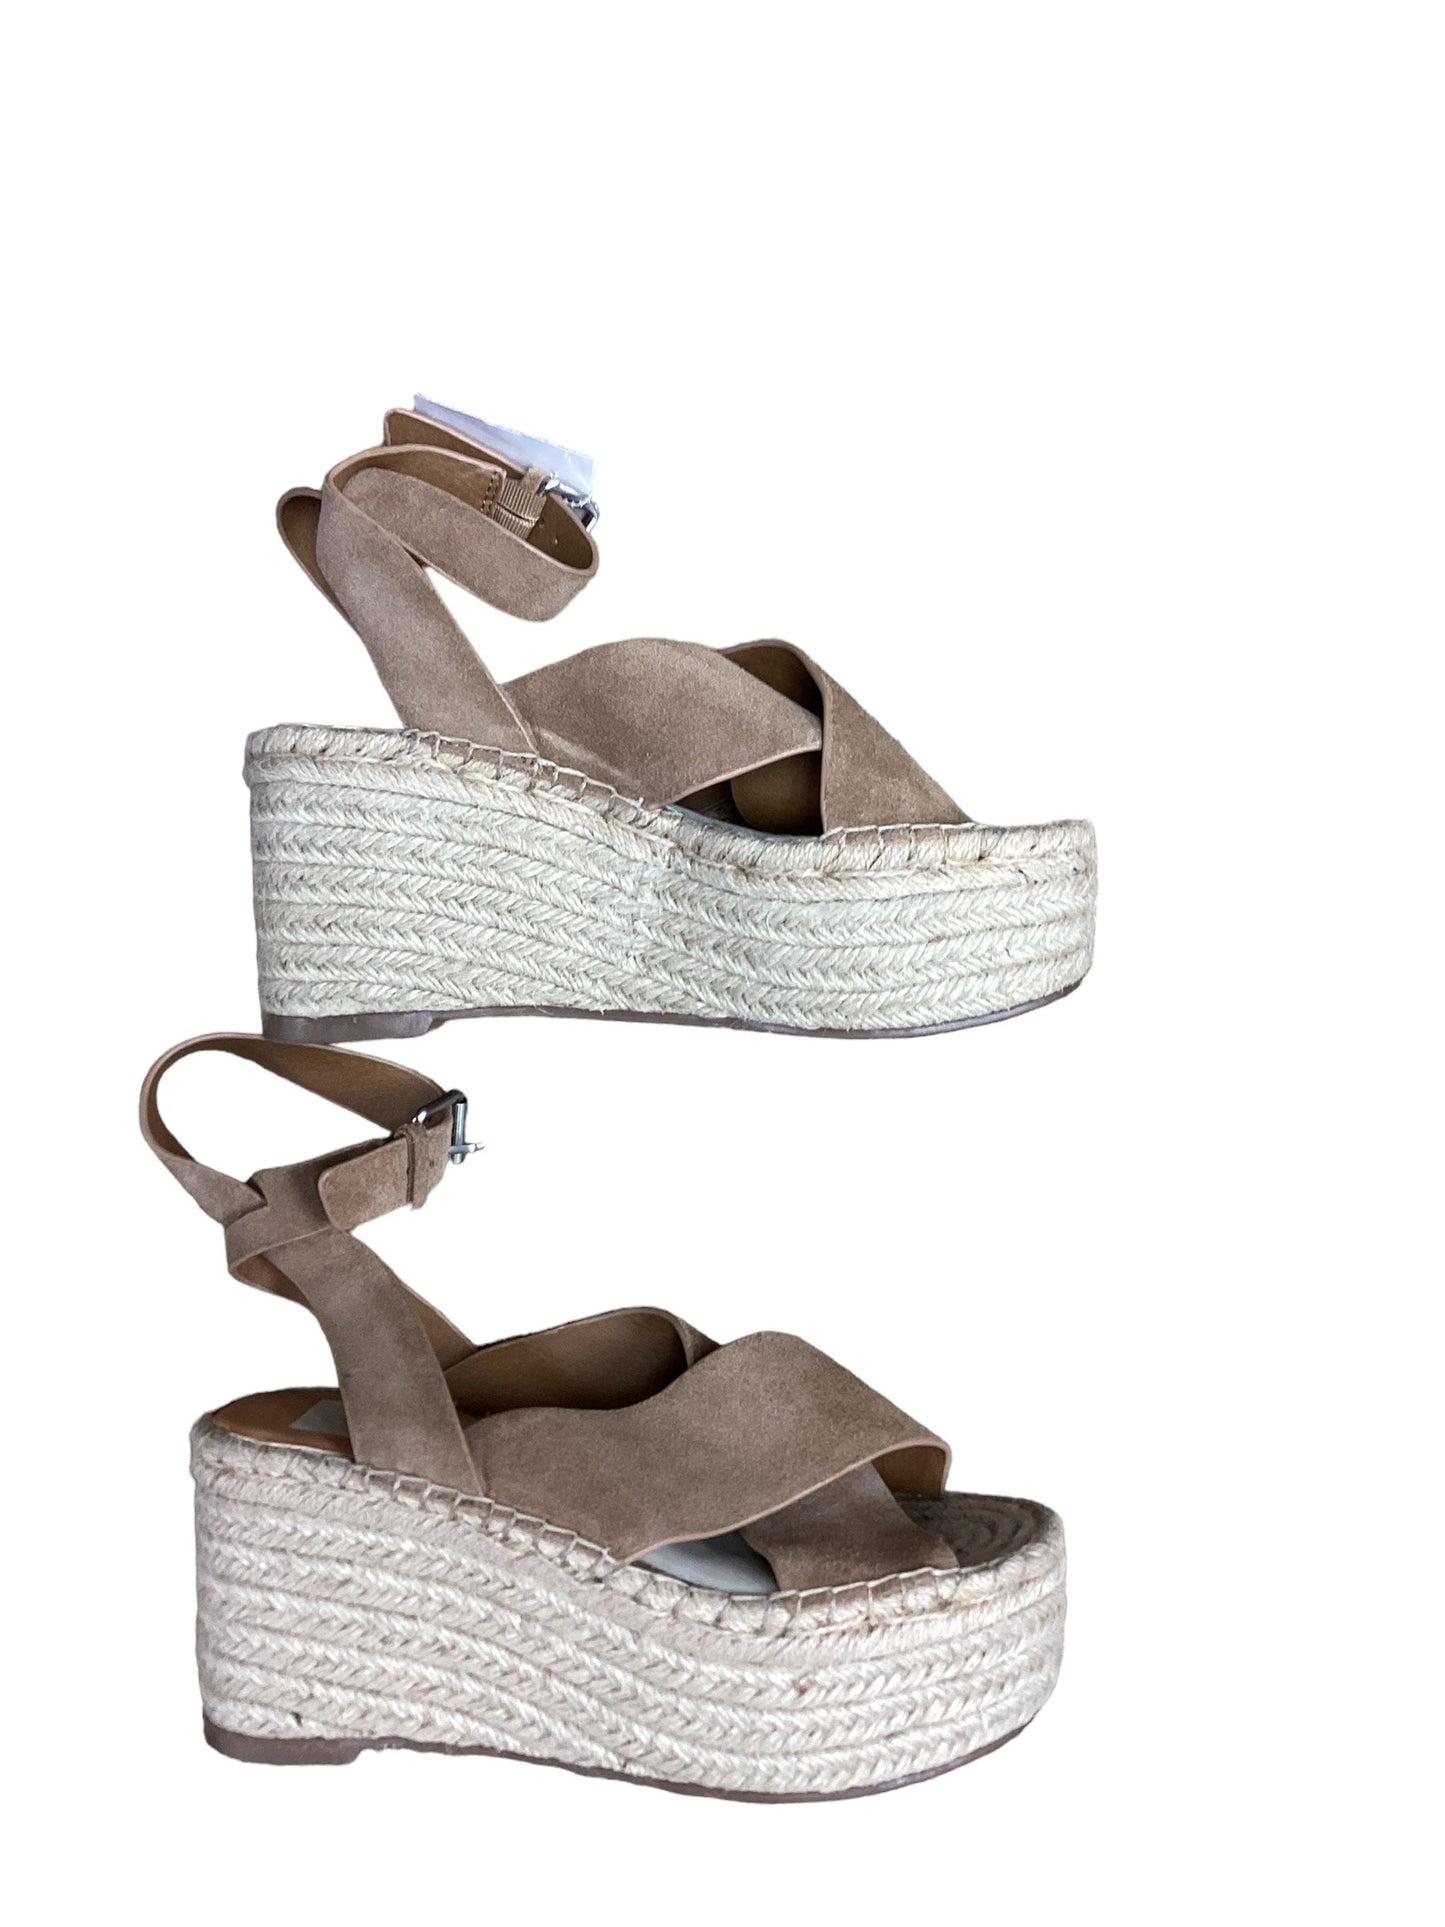 Tan Sandals Heels Platform Dolce Vita, Size 7